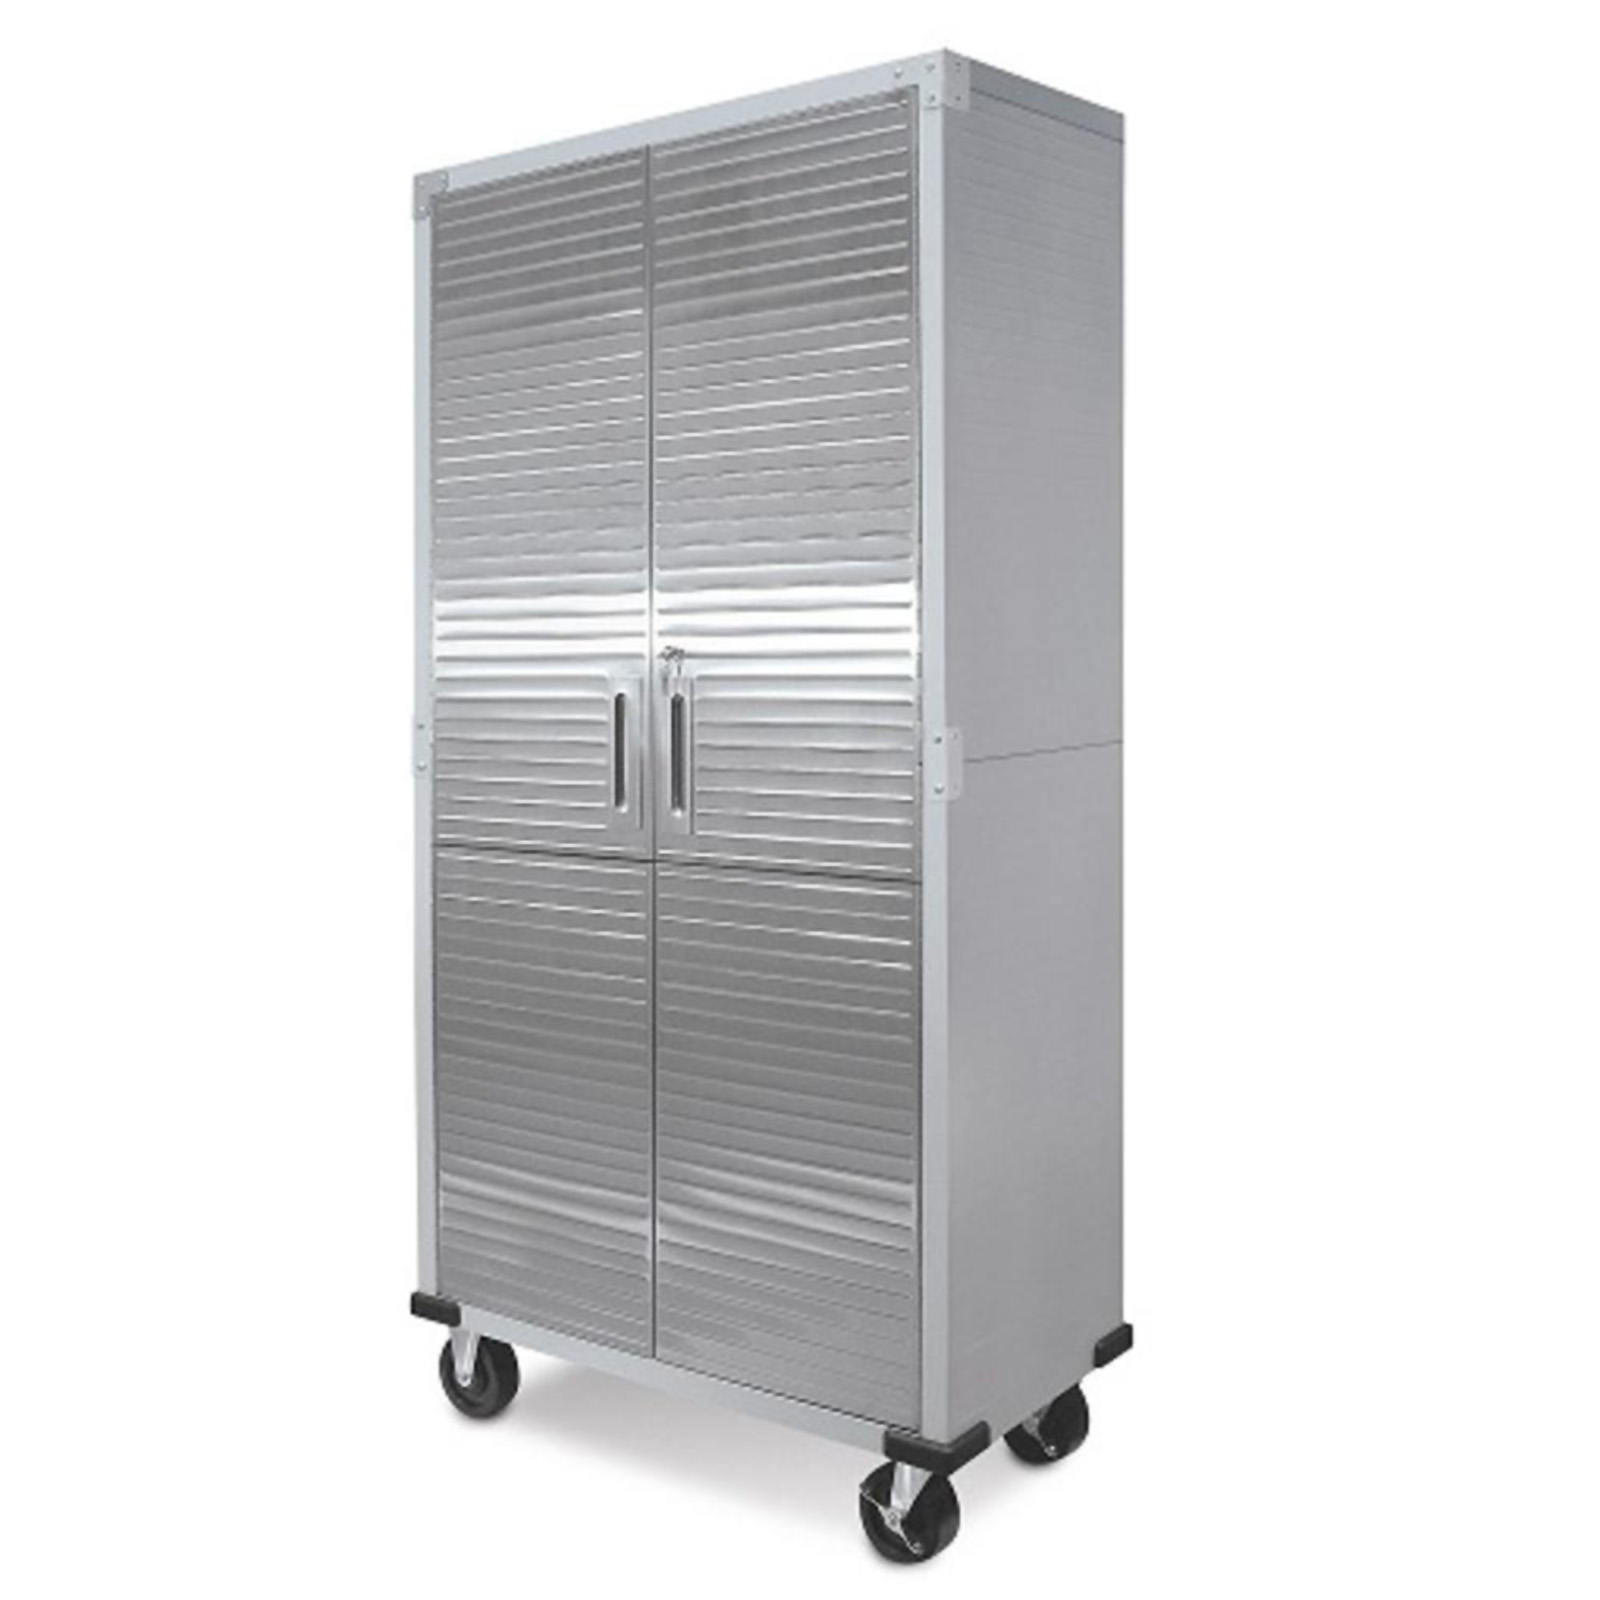 Seville Classics UltraHD 600lb 4-Shelf Storage Cabinet - Silver